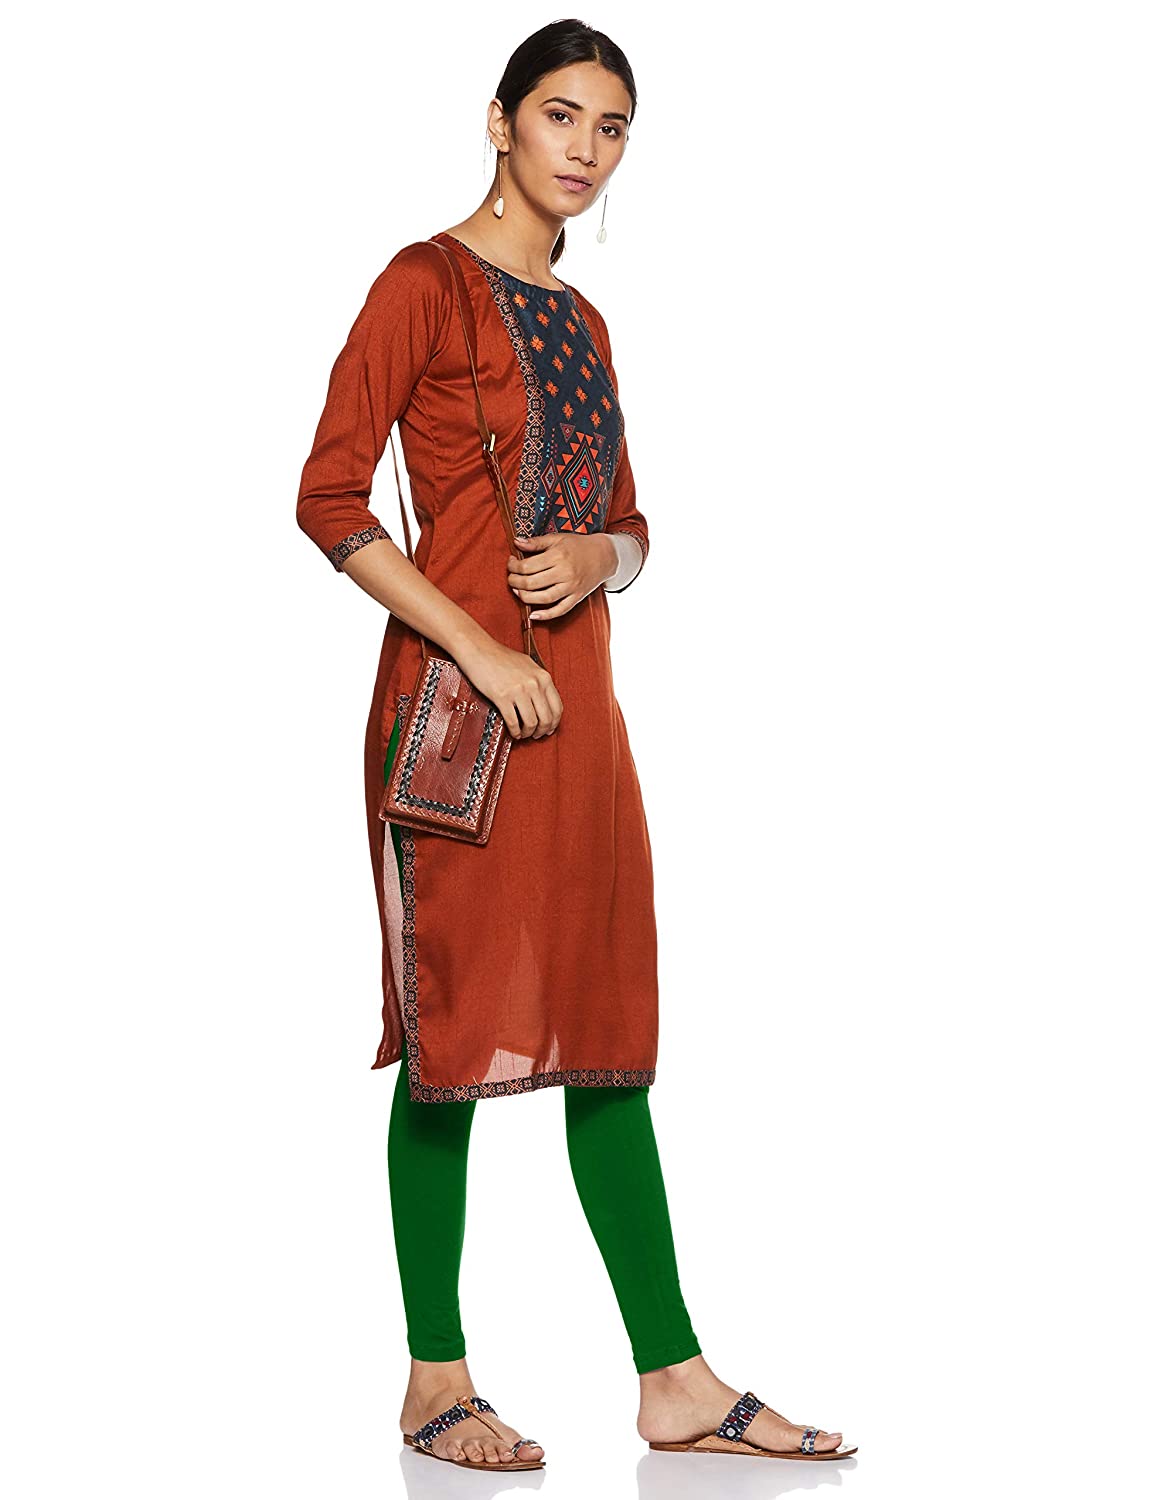 Green Rupa Cotton Leggings for Woman - Stilento